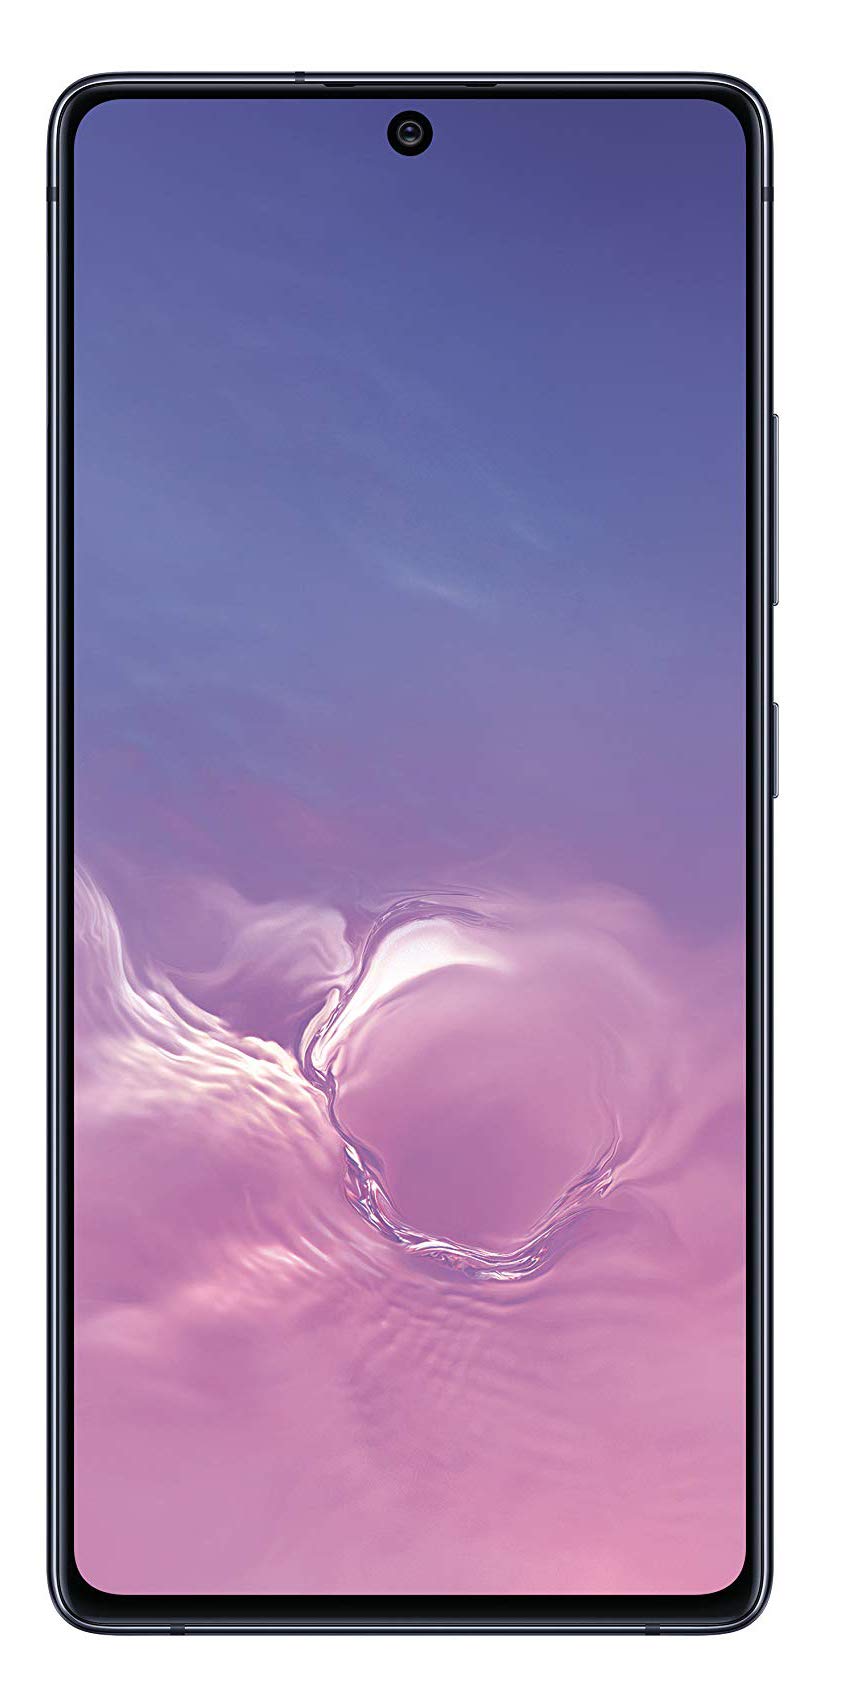 Samsung Galaxy S10 Lite New Unlocked Android Cell Phone, 128GB of Storage, GSM & CDMA Compatible, Single SIM, US Version, Black